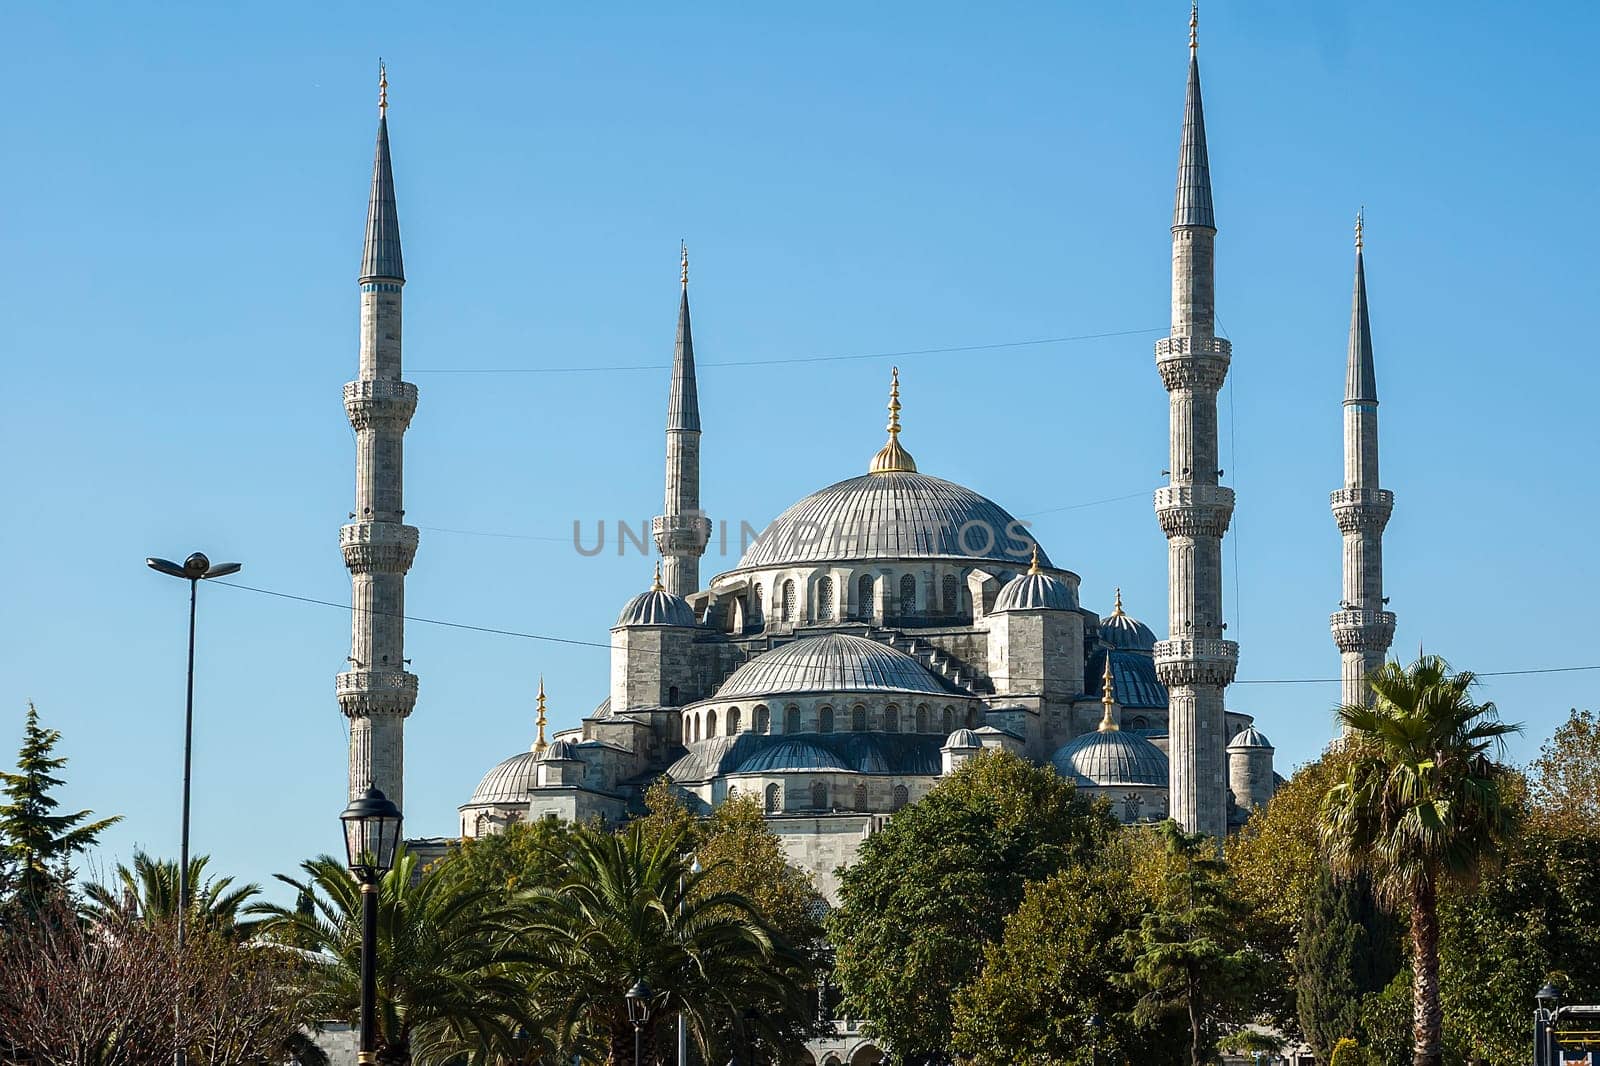 Sultan Ahmet Camii, the Blue Mosque in Istanbul, Turkey